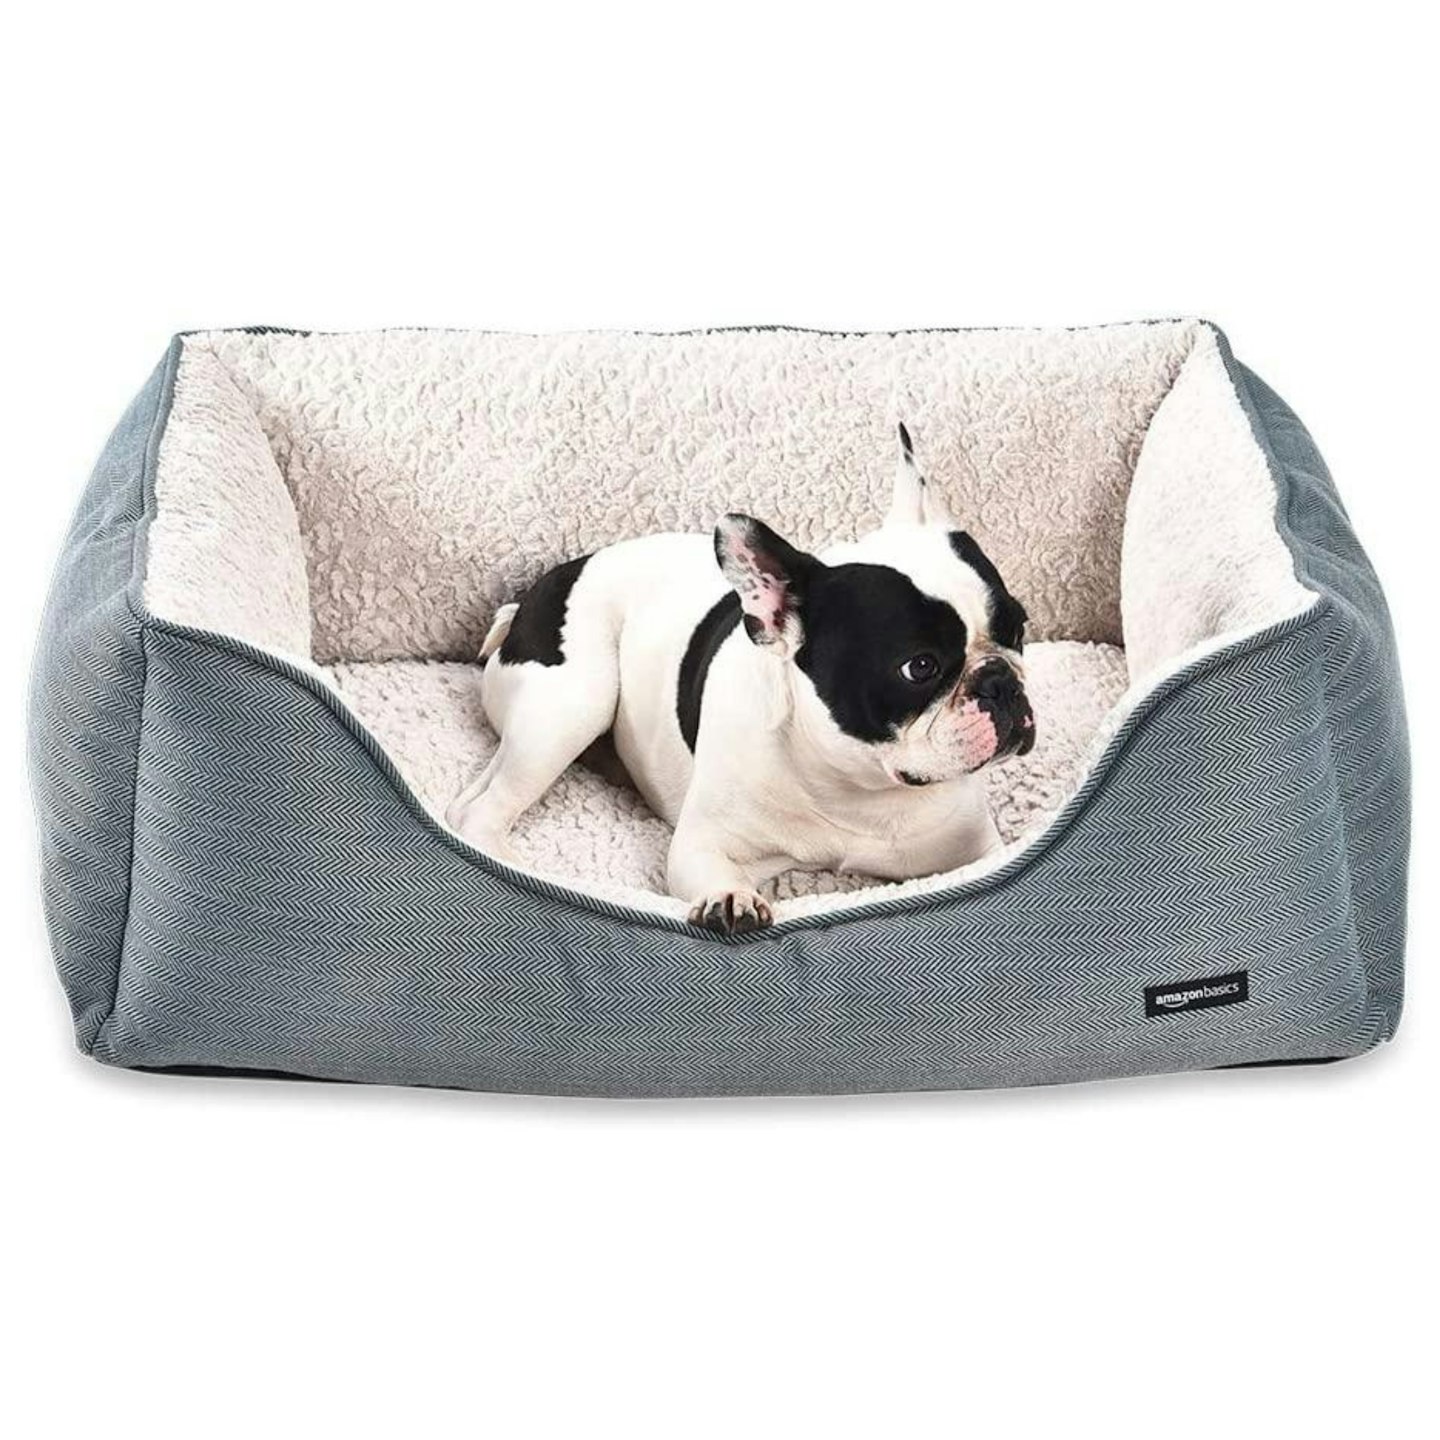 AmazonBasics Cuddler Pet Bed